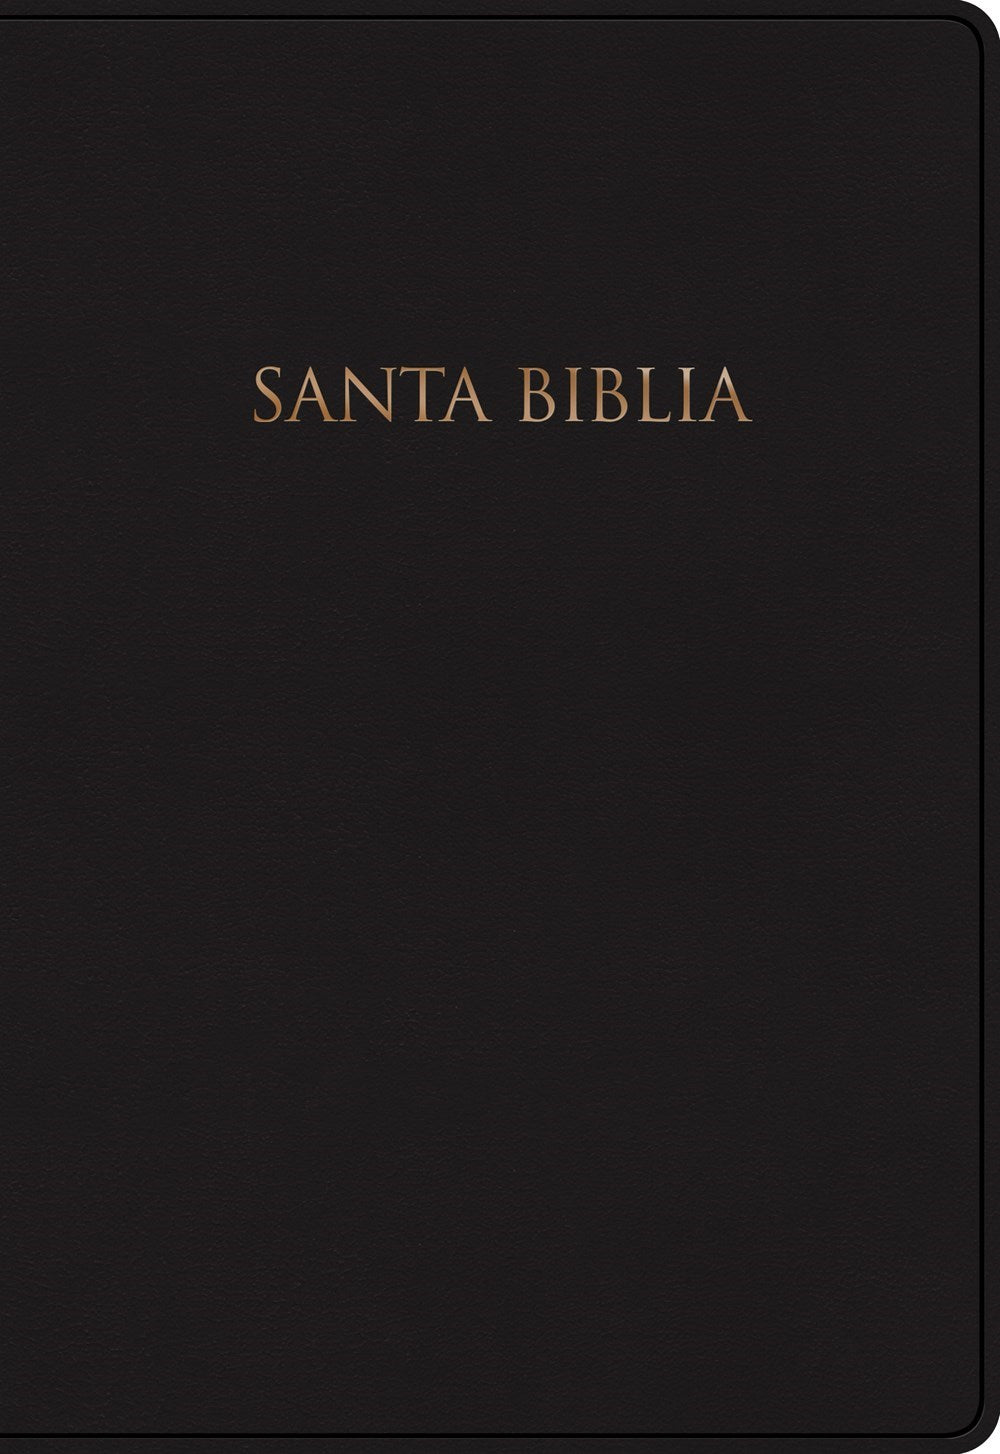 Span-NIV Gift And Award Bible (Biblia Para Regalos Y Premios)-Black Hardcover